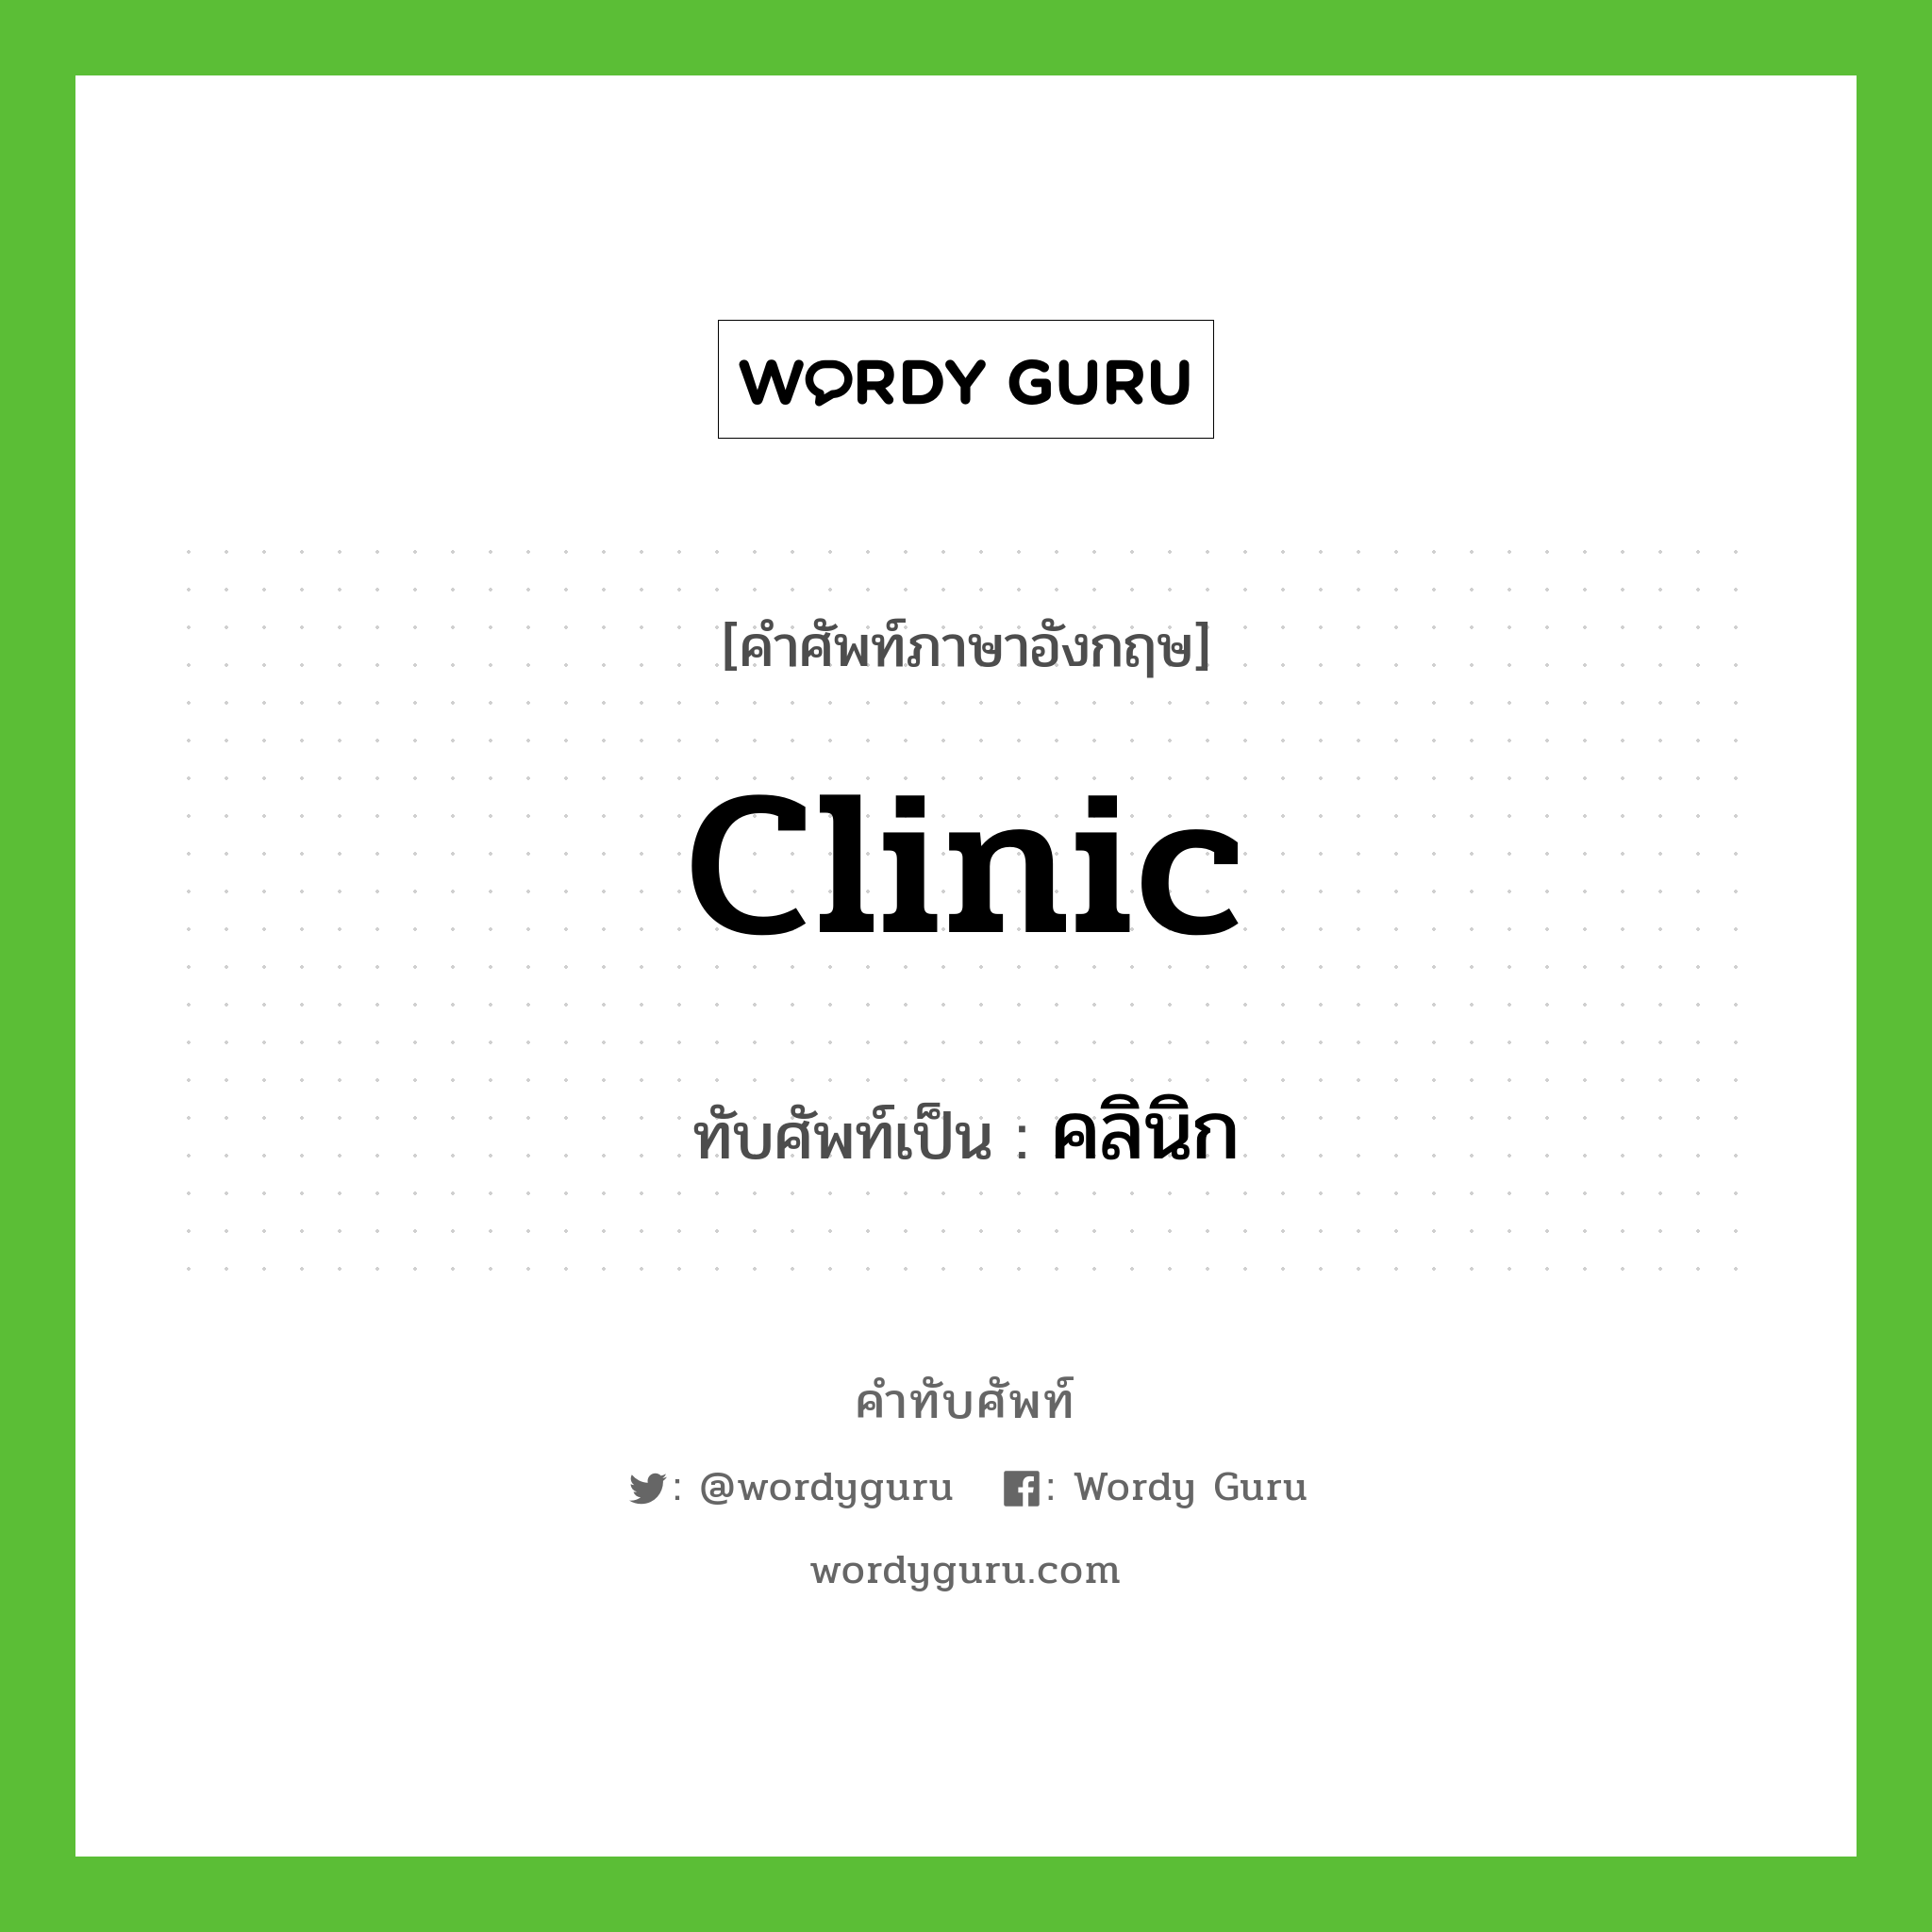 clinic เขียนเป็นคำไทยว่าอะไร?, คำศัพท์ภาษาอังกฤษ clinic ทับศัพท์เป็น คลินิก